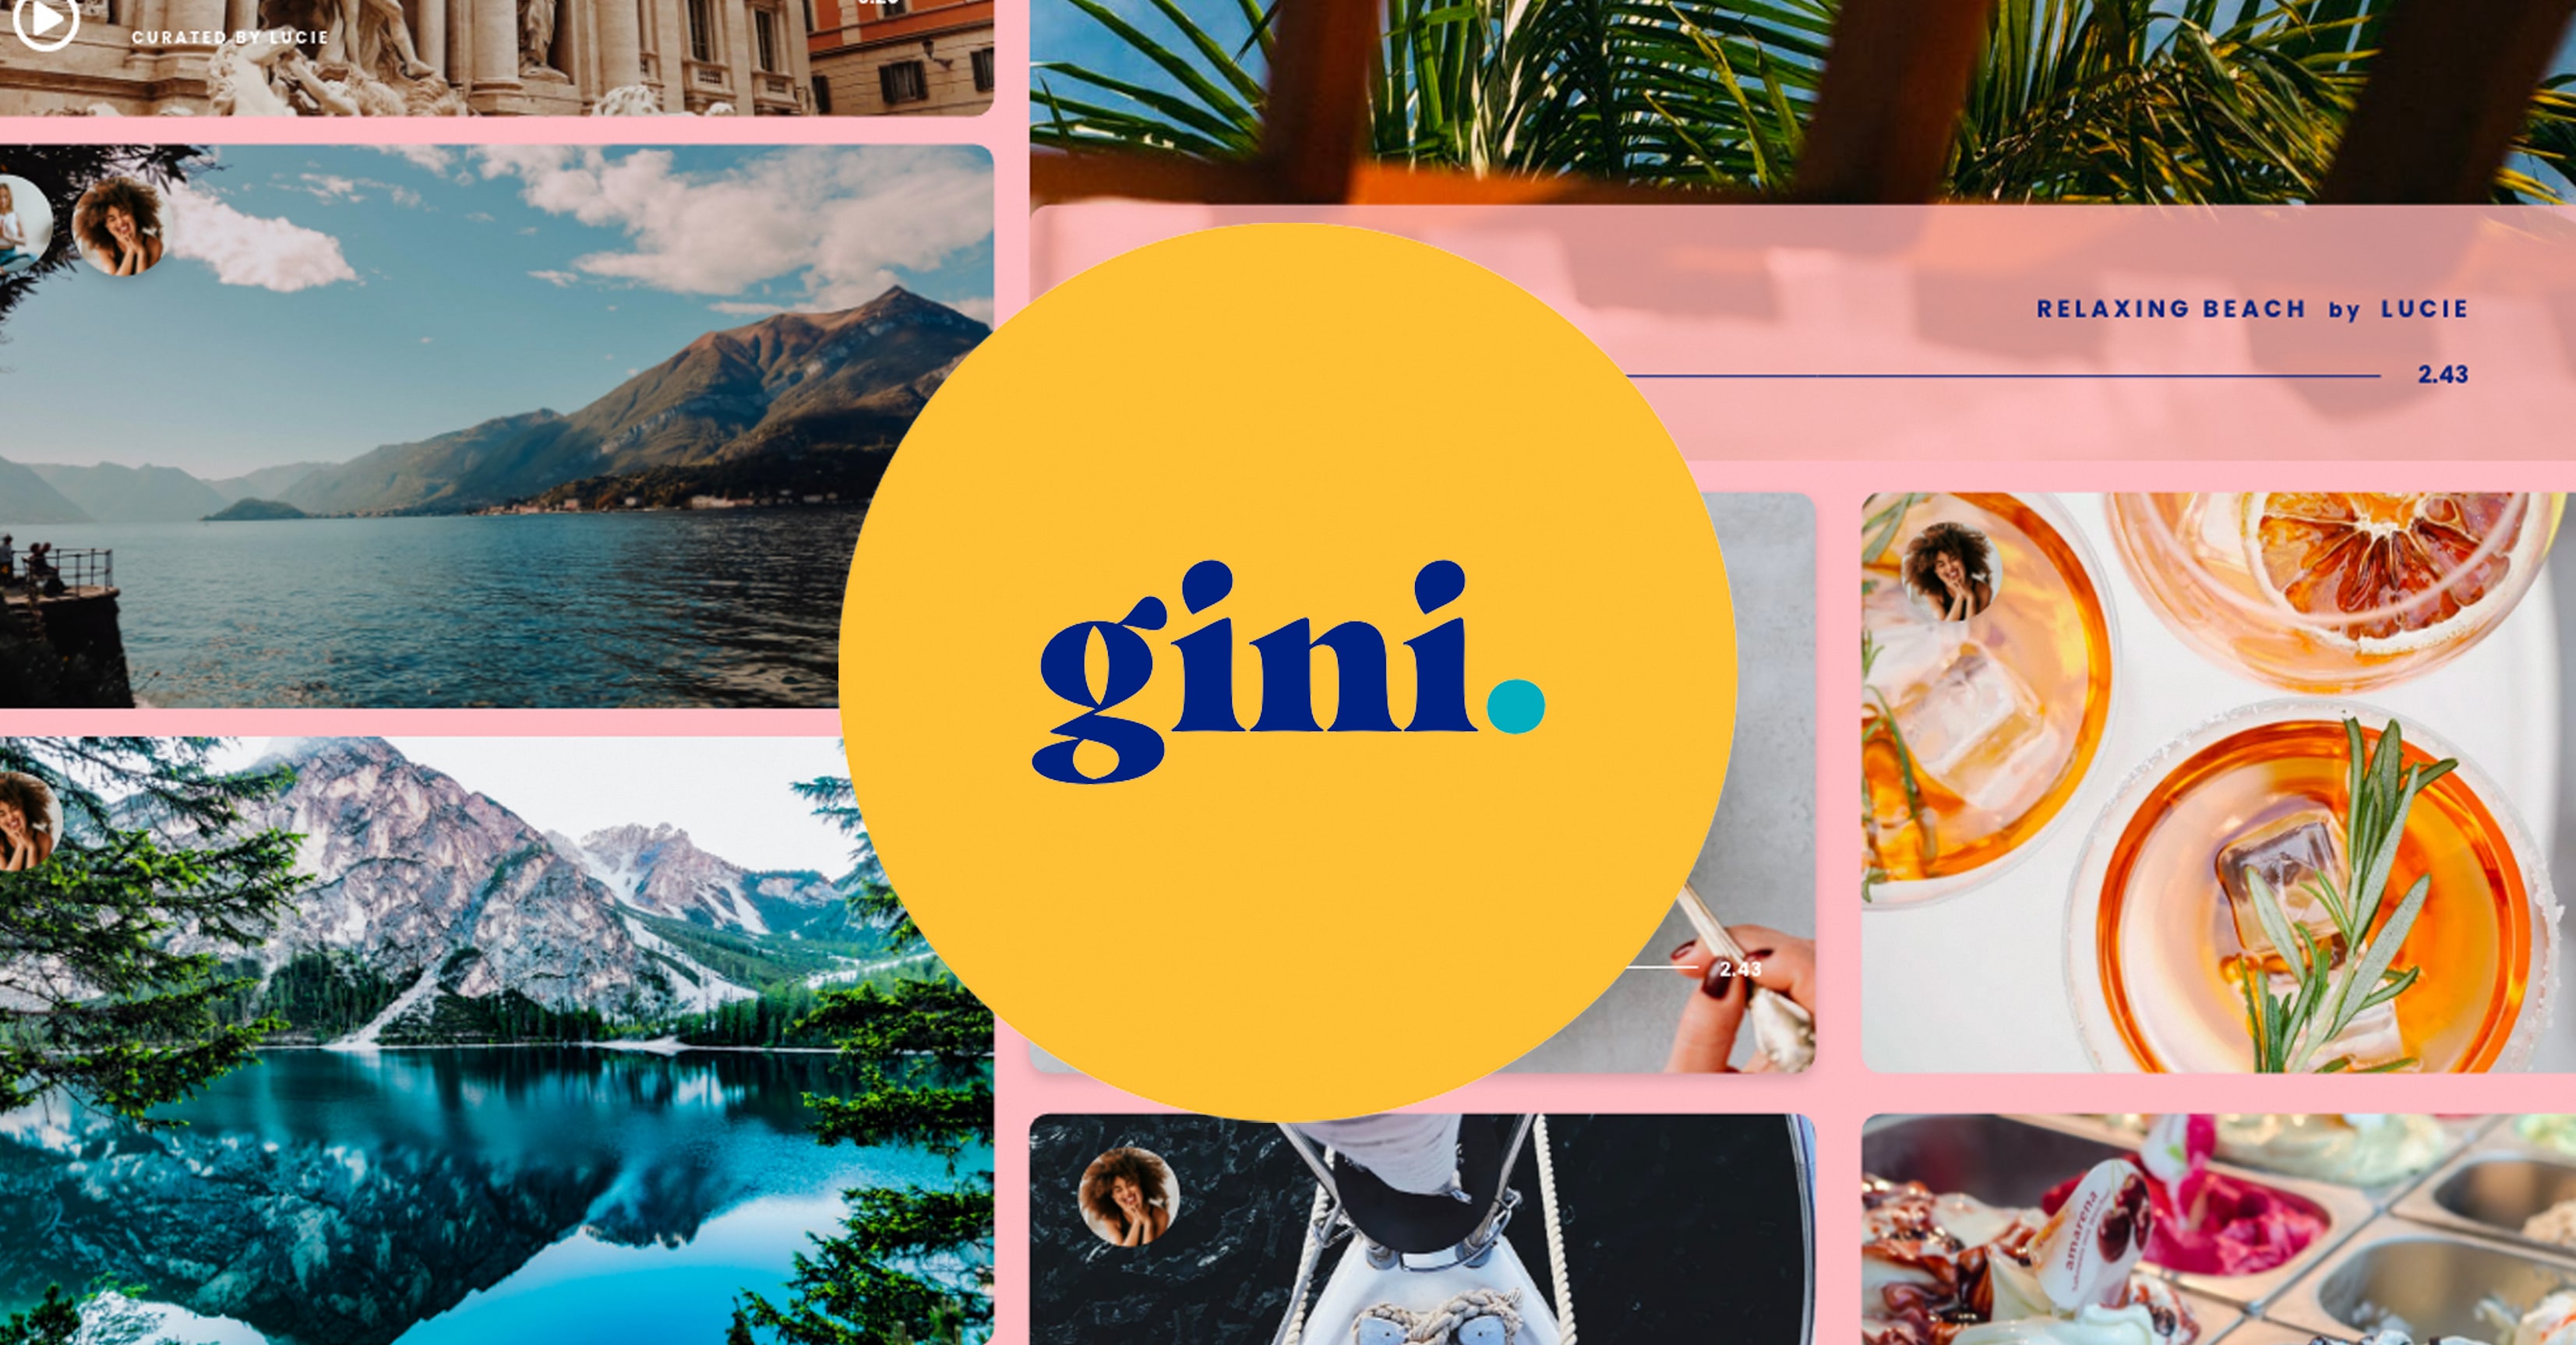 Gini-Image-min.jpg